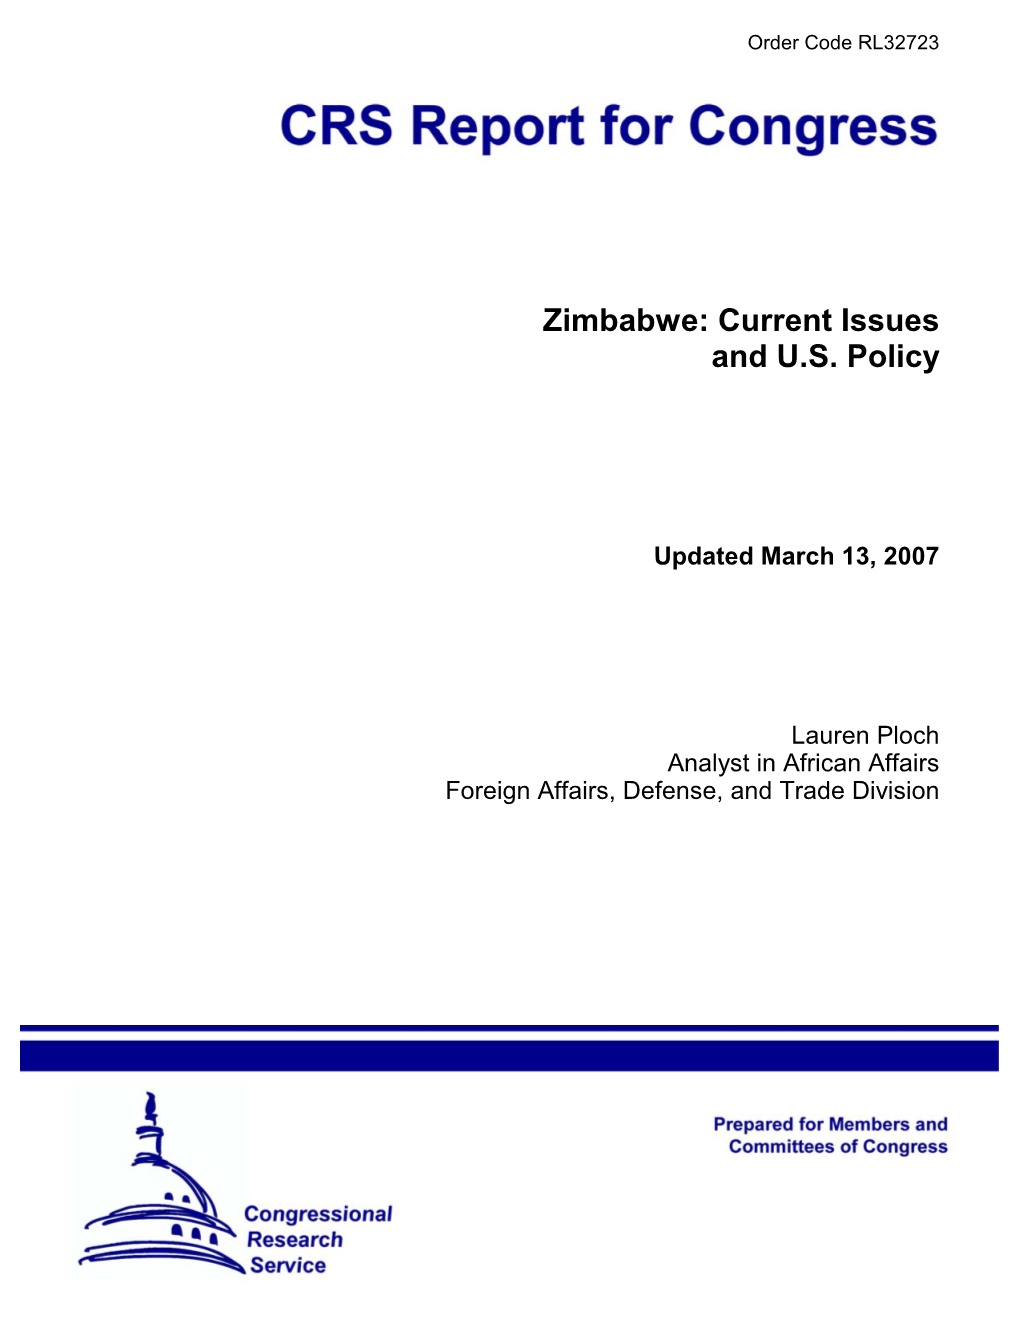 Zimbabwe: Current Issues and U.S